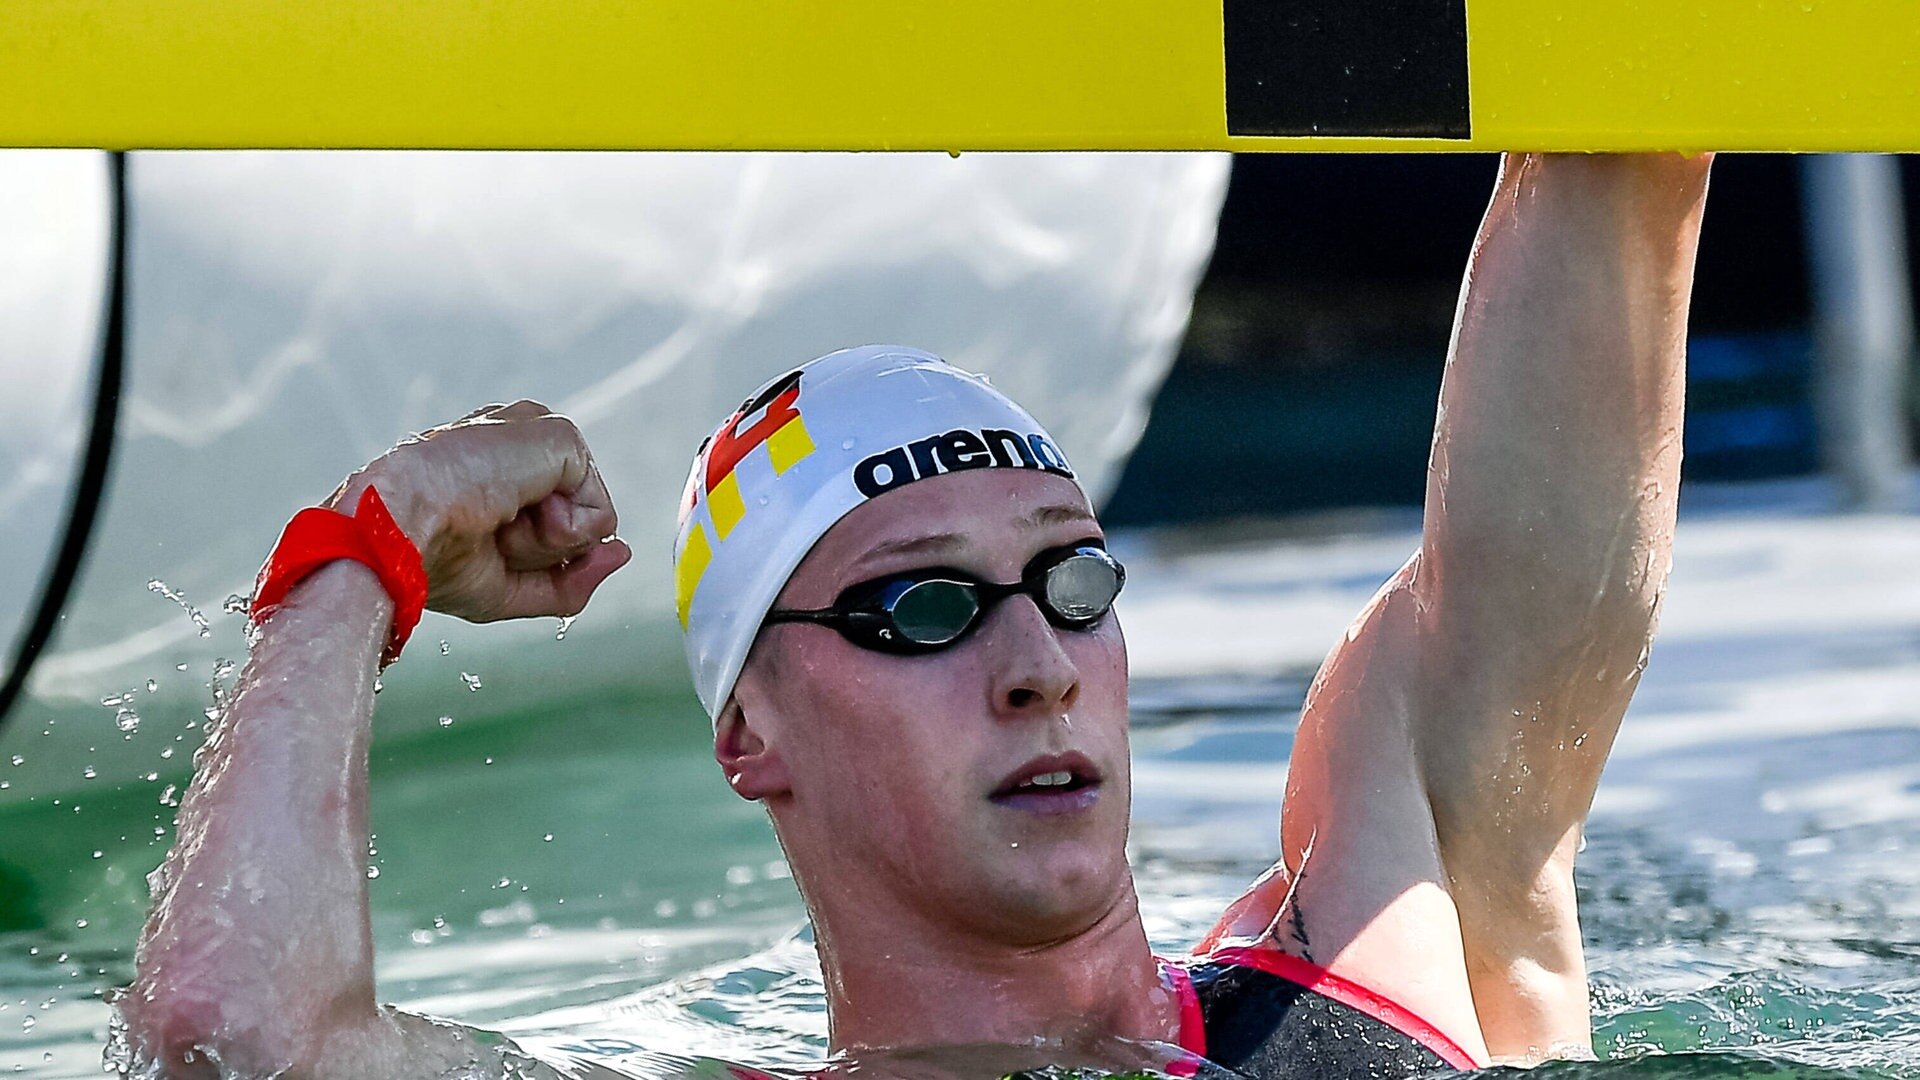 Schwimm-WM Wellbrock holt zweites Freiwasser-Gold NDR.de - Sport